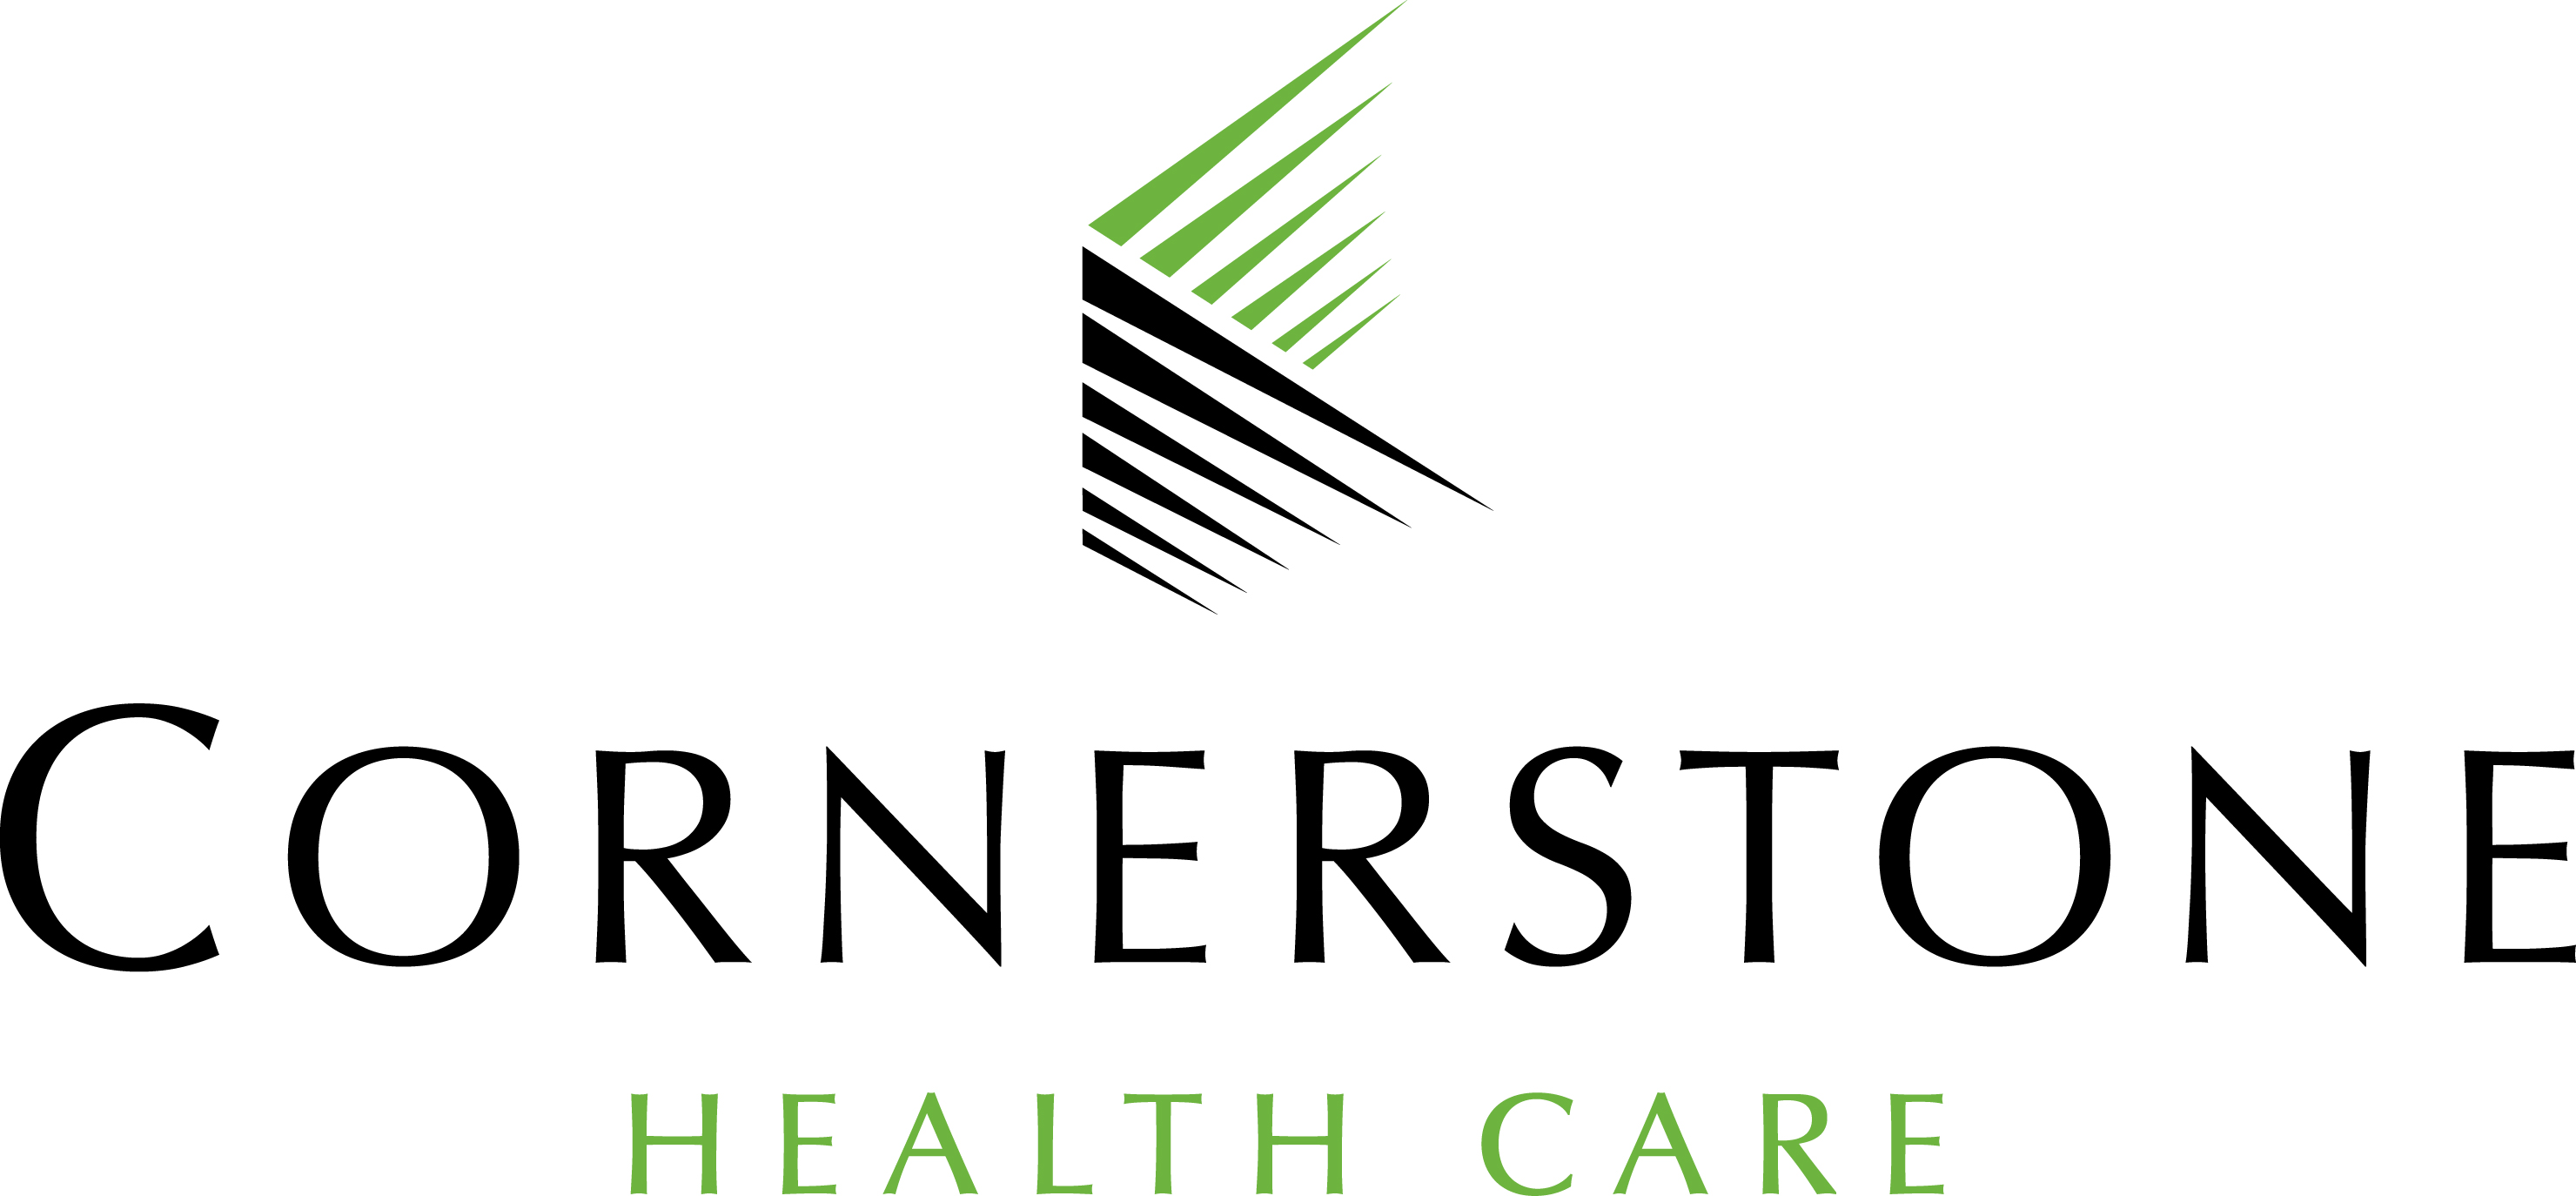 Cornerstone Health Care